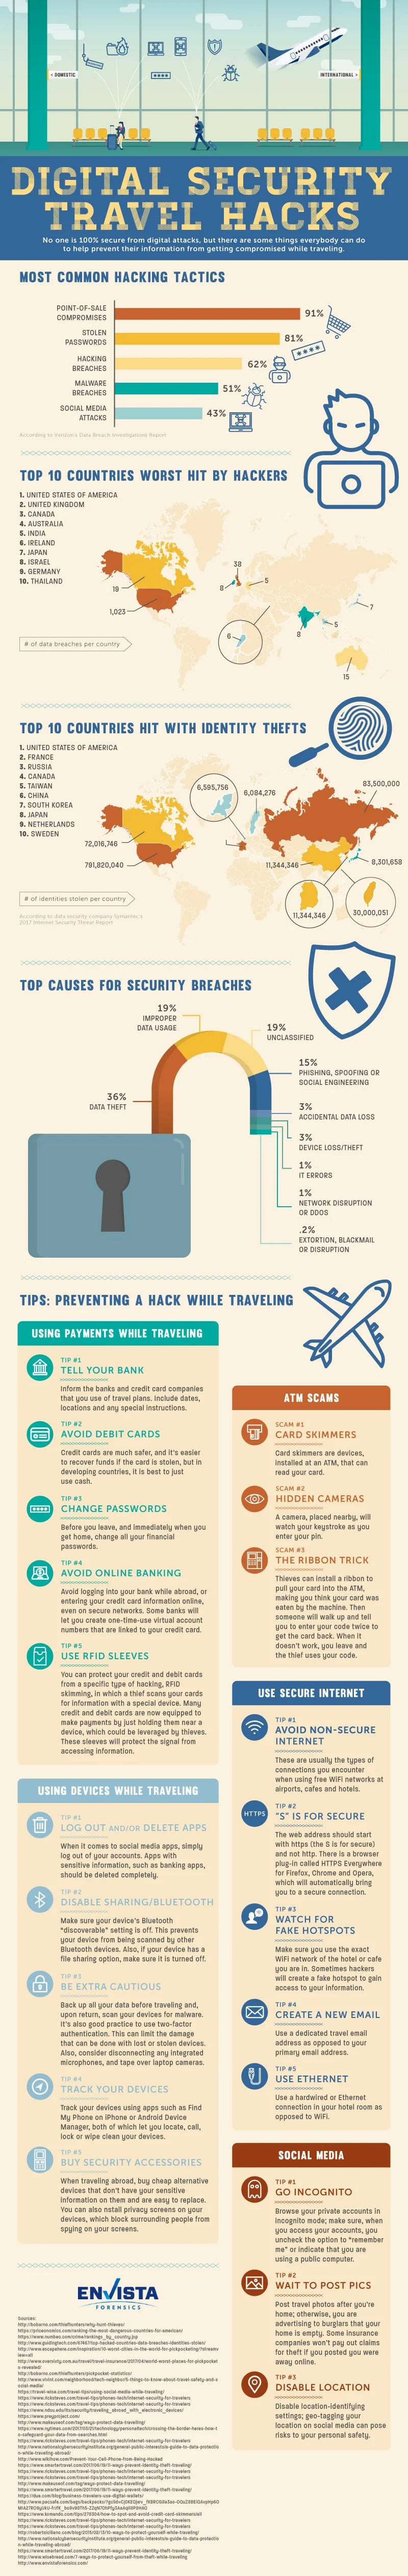 Digital Security Travel Hacks - #infographic